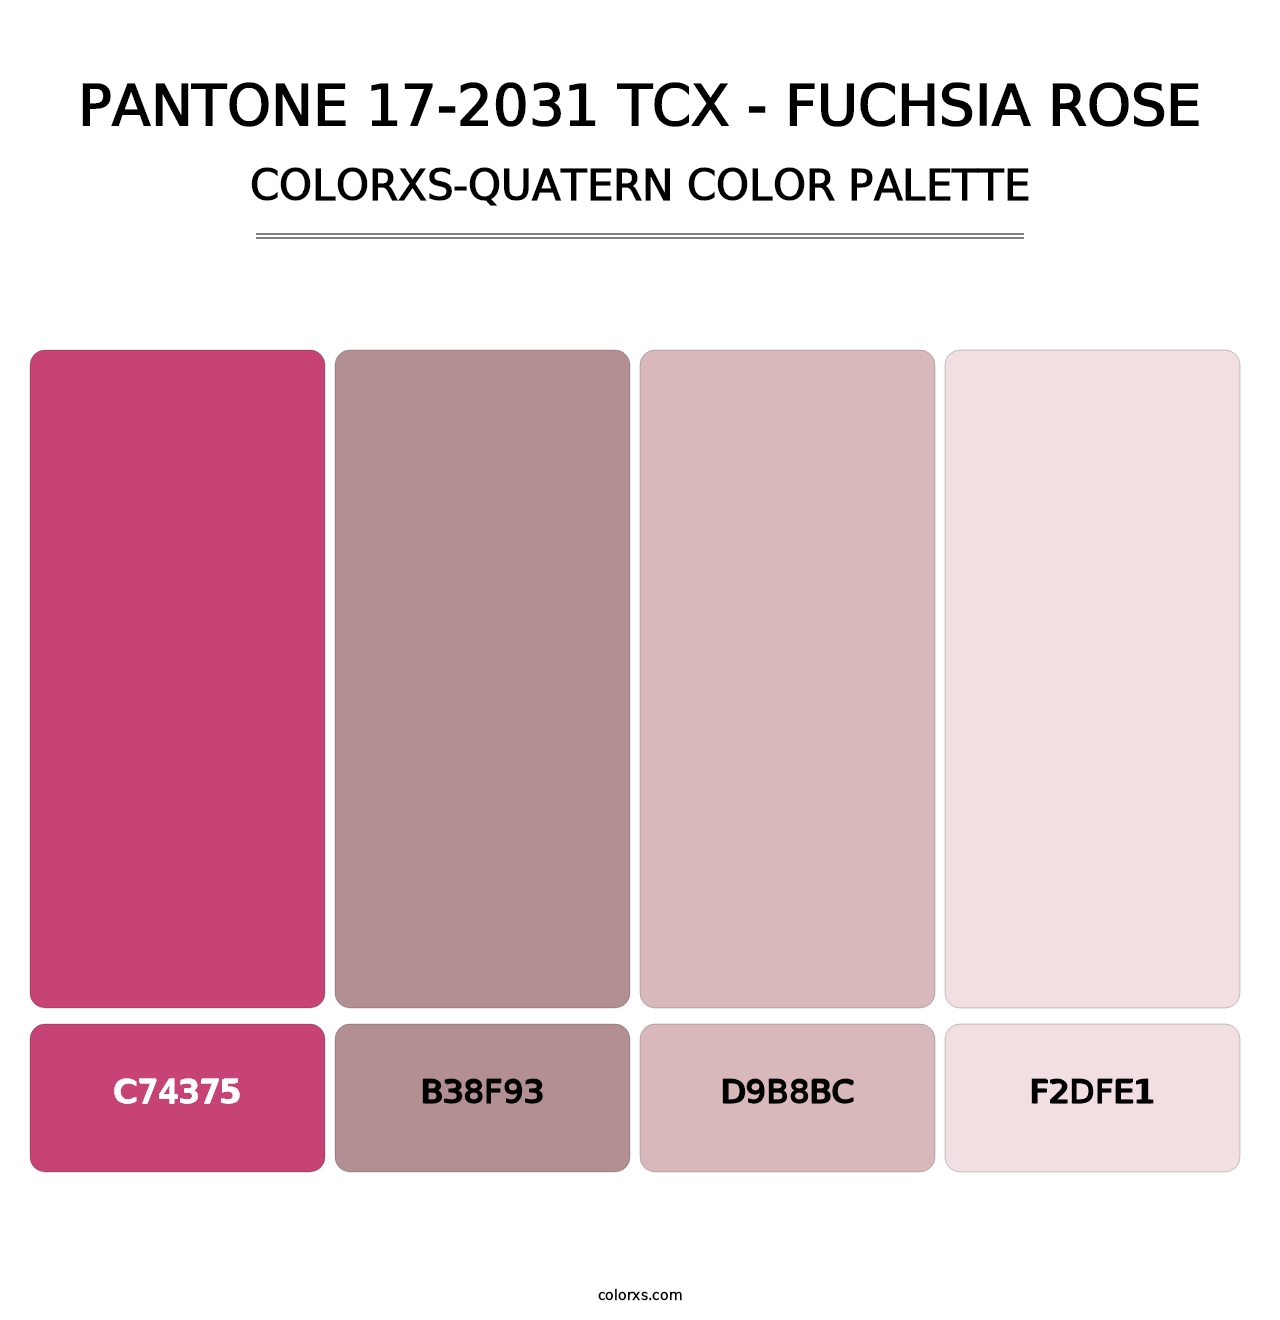 PANTONE 17-2031 TCX - Fuchsia Rose - Colorxs Quatern Palette